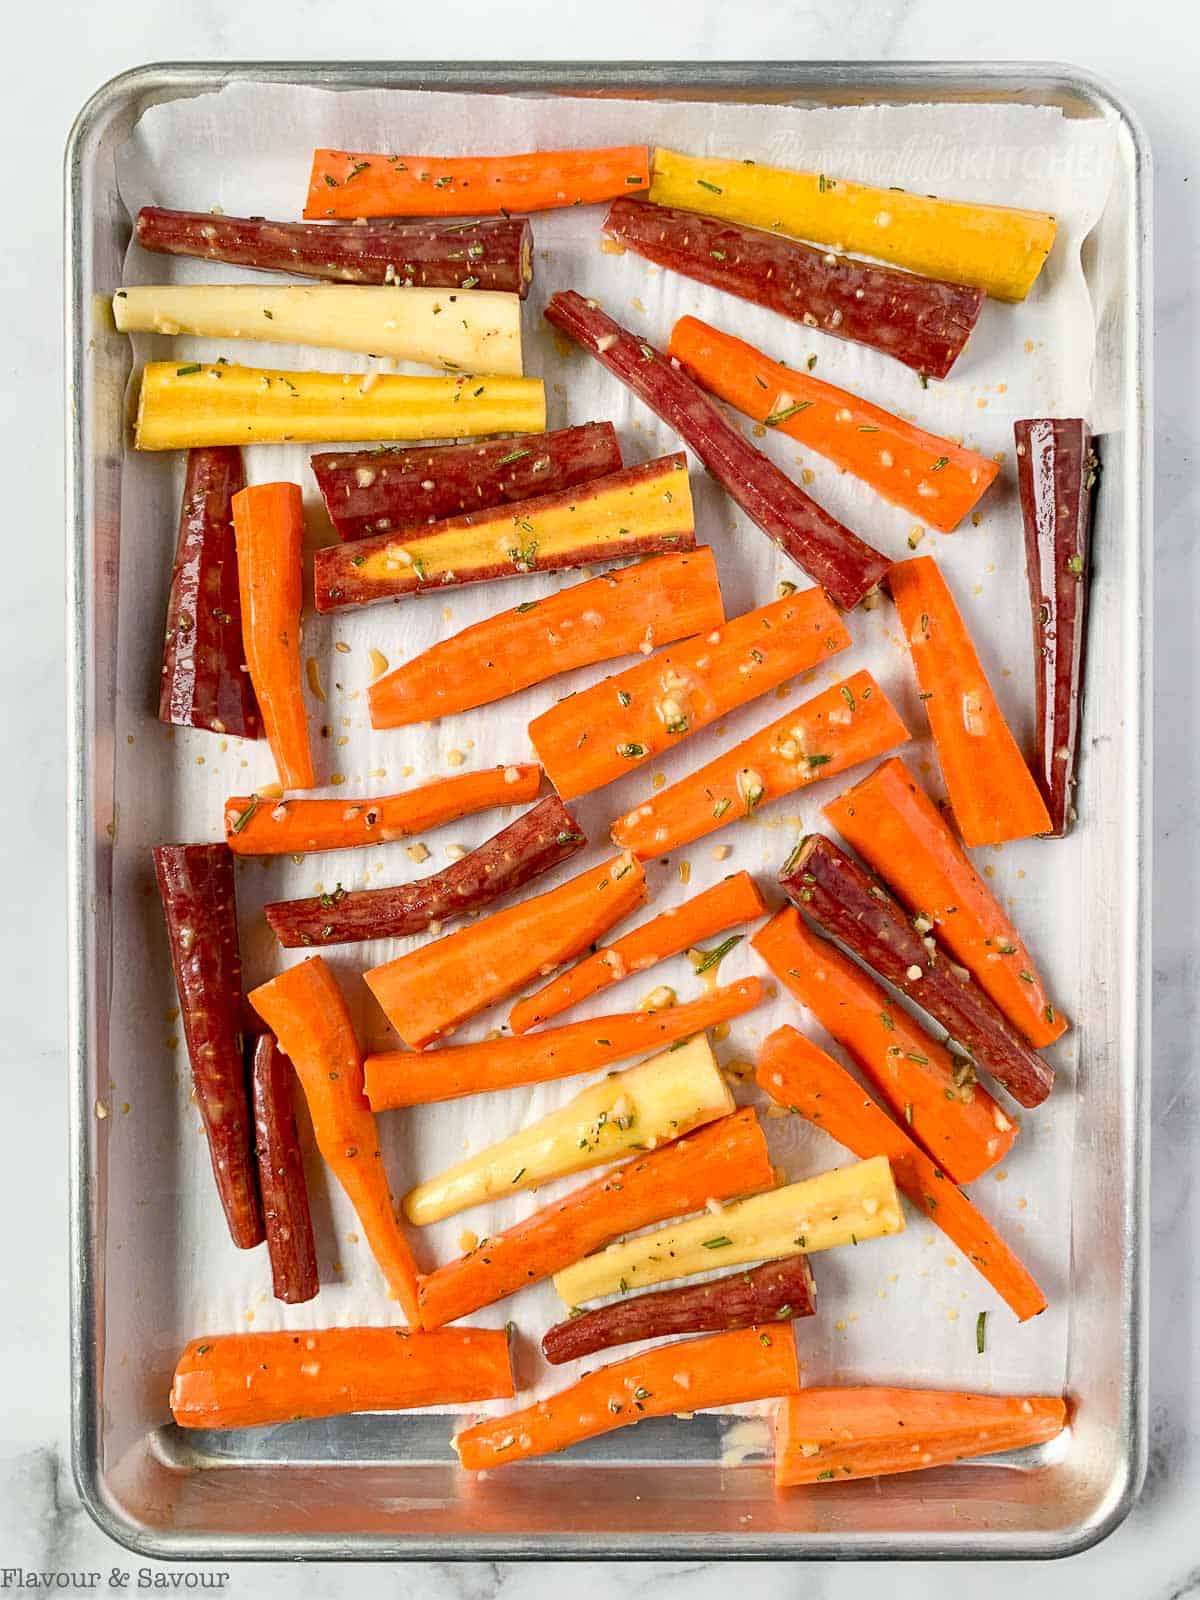 Honey-mustard glazed carrots on a baking sheet.